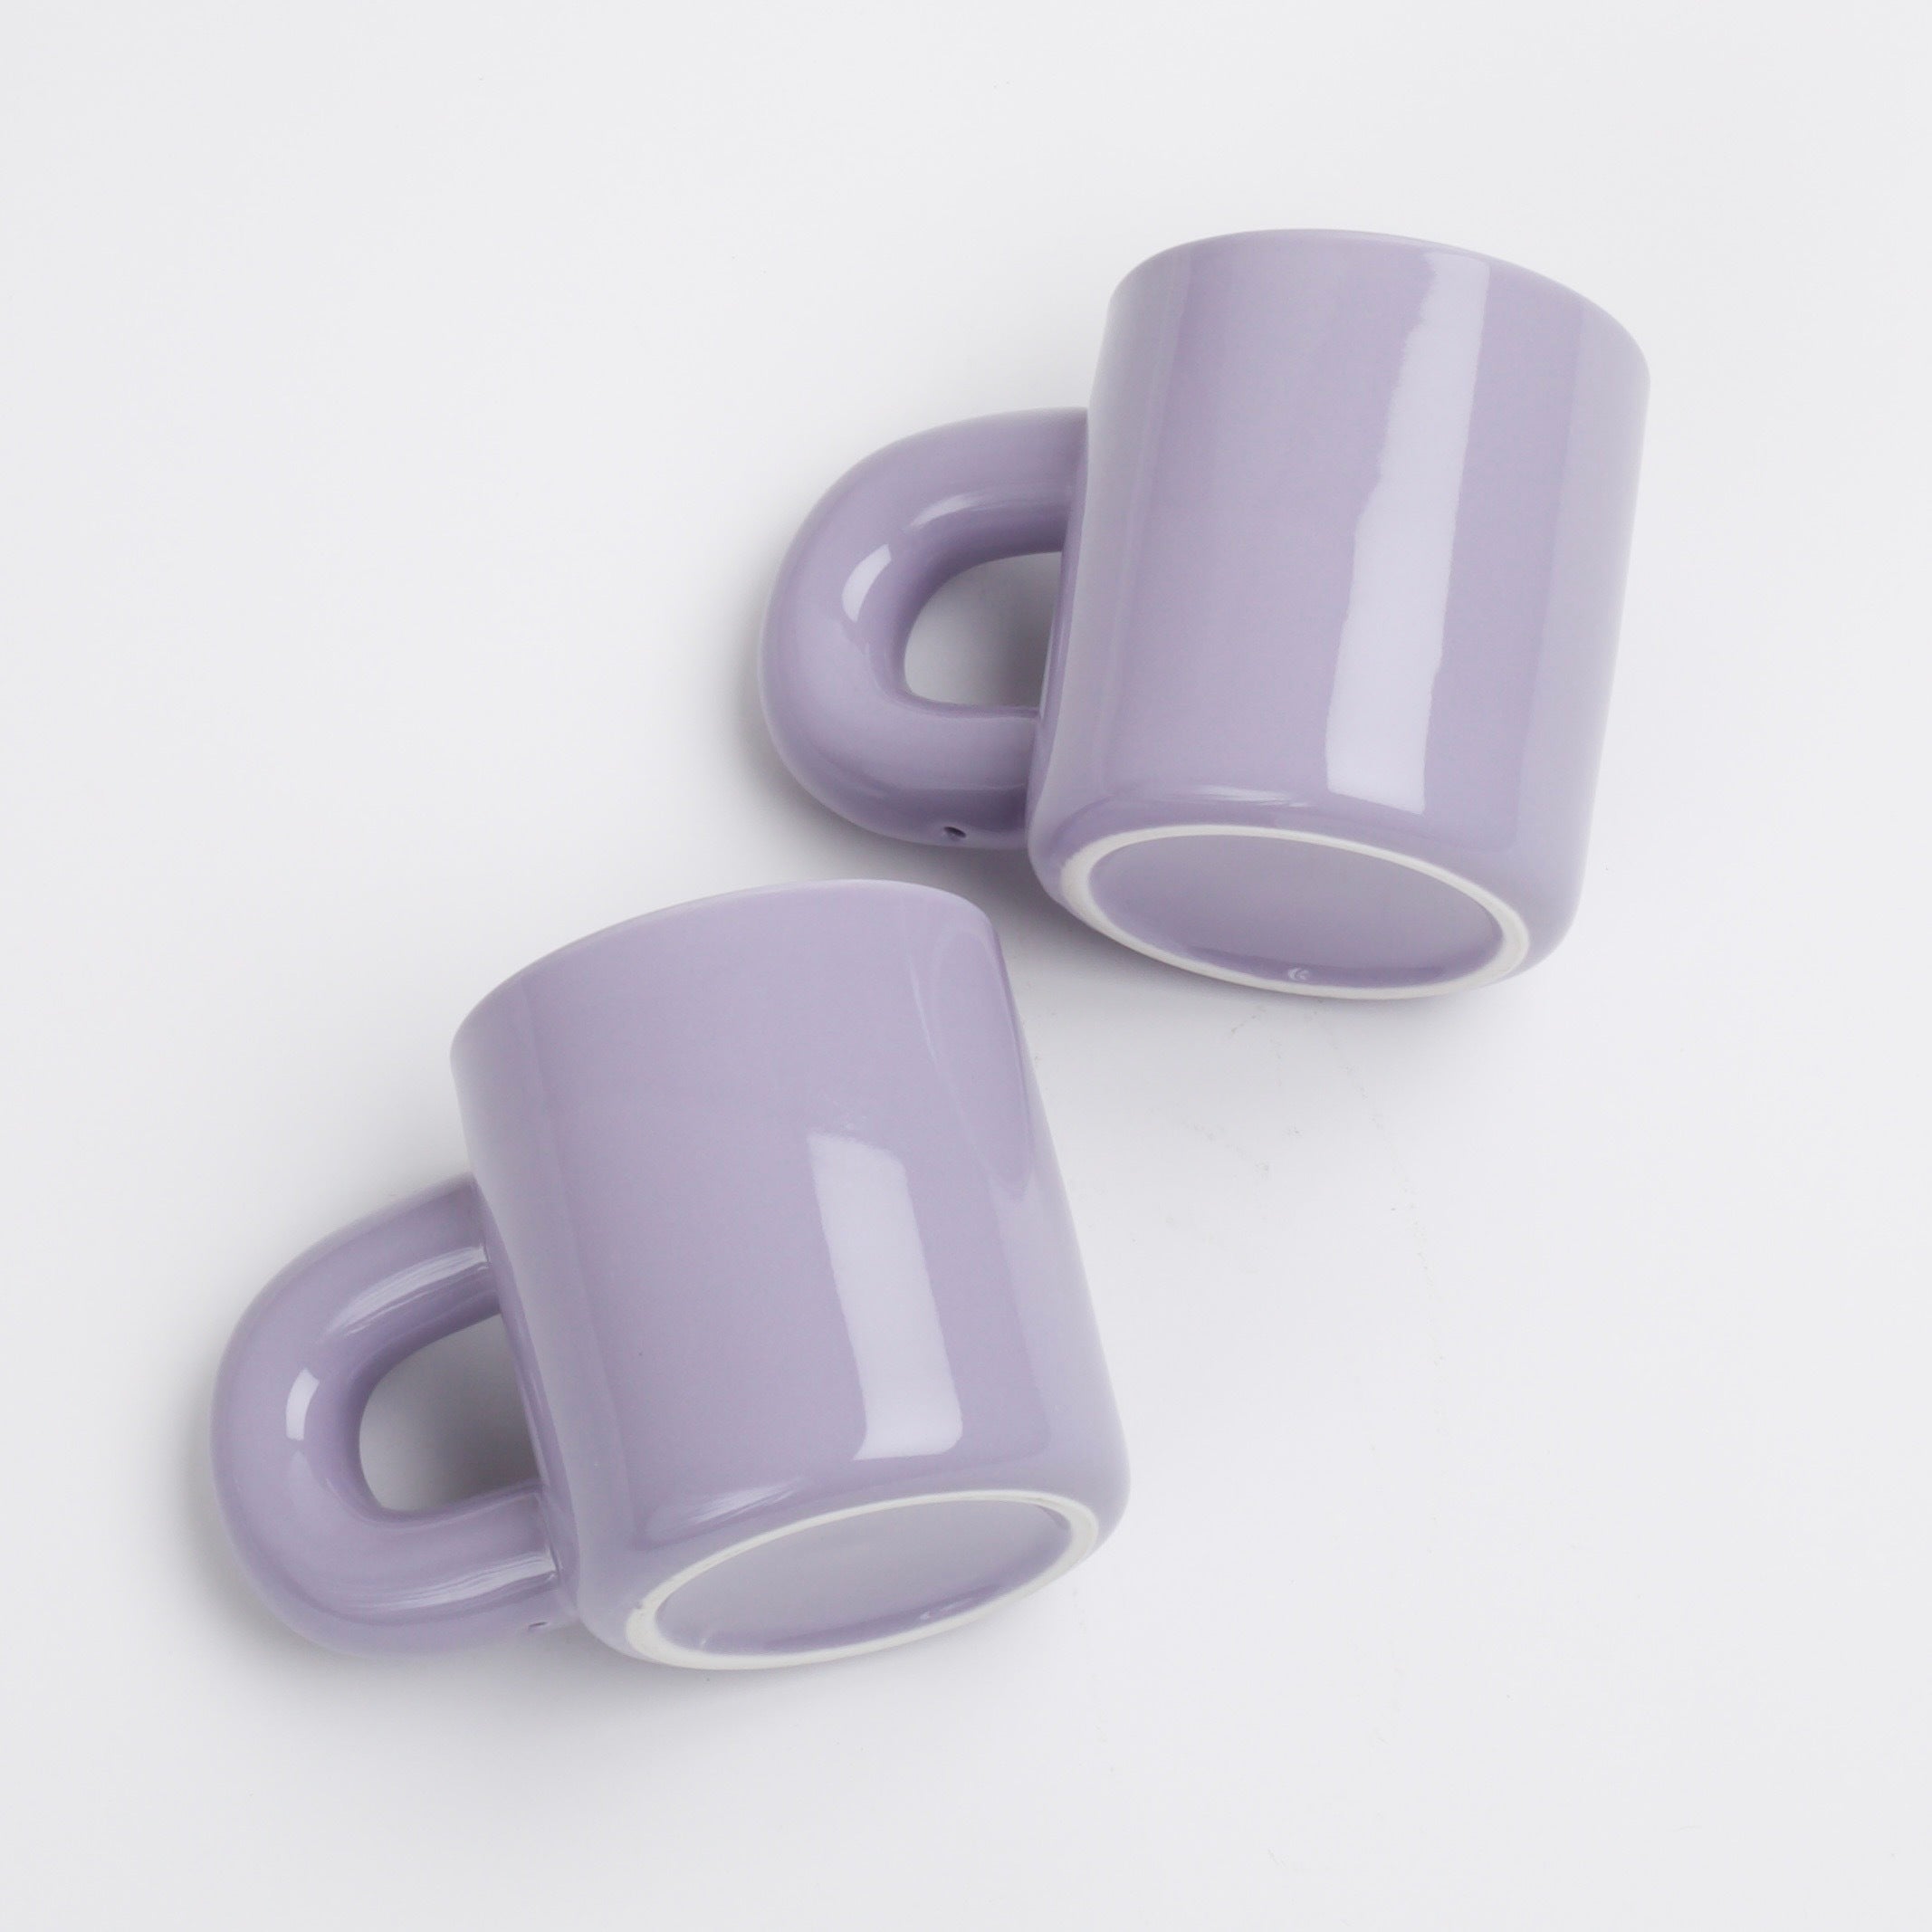 2 thick purple ceramic mugs